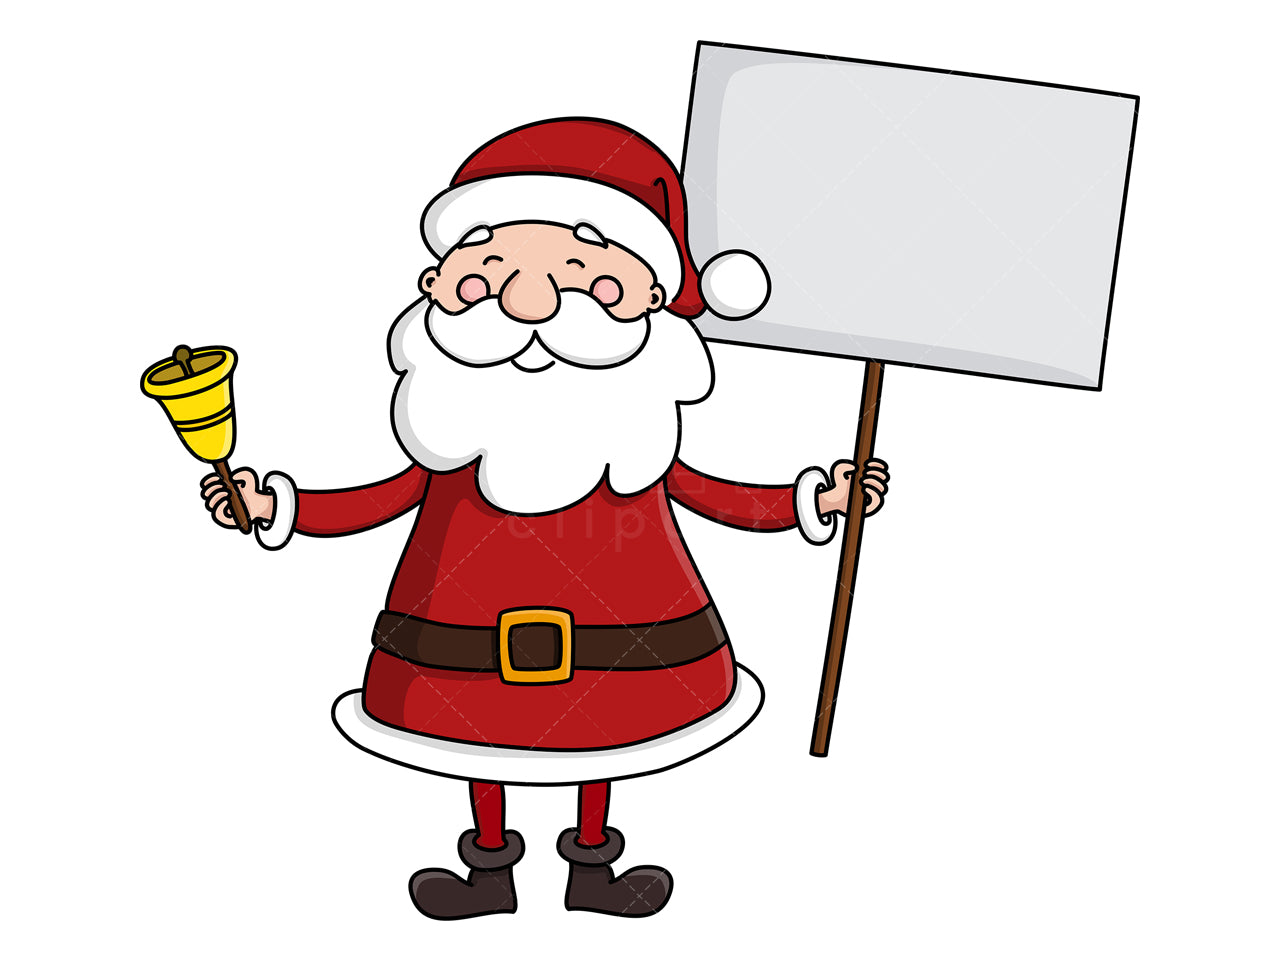 Royalty-free stock vector illustration of  a cute santa claus holding blank billboard.